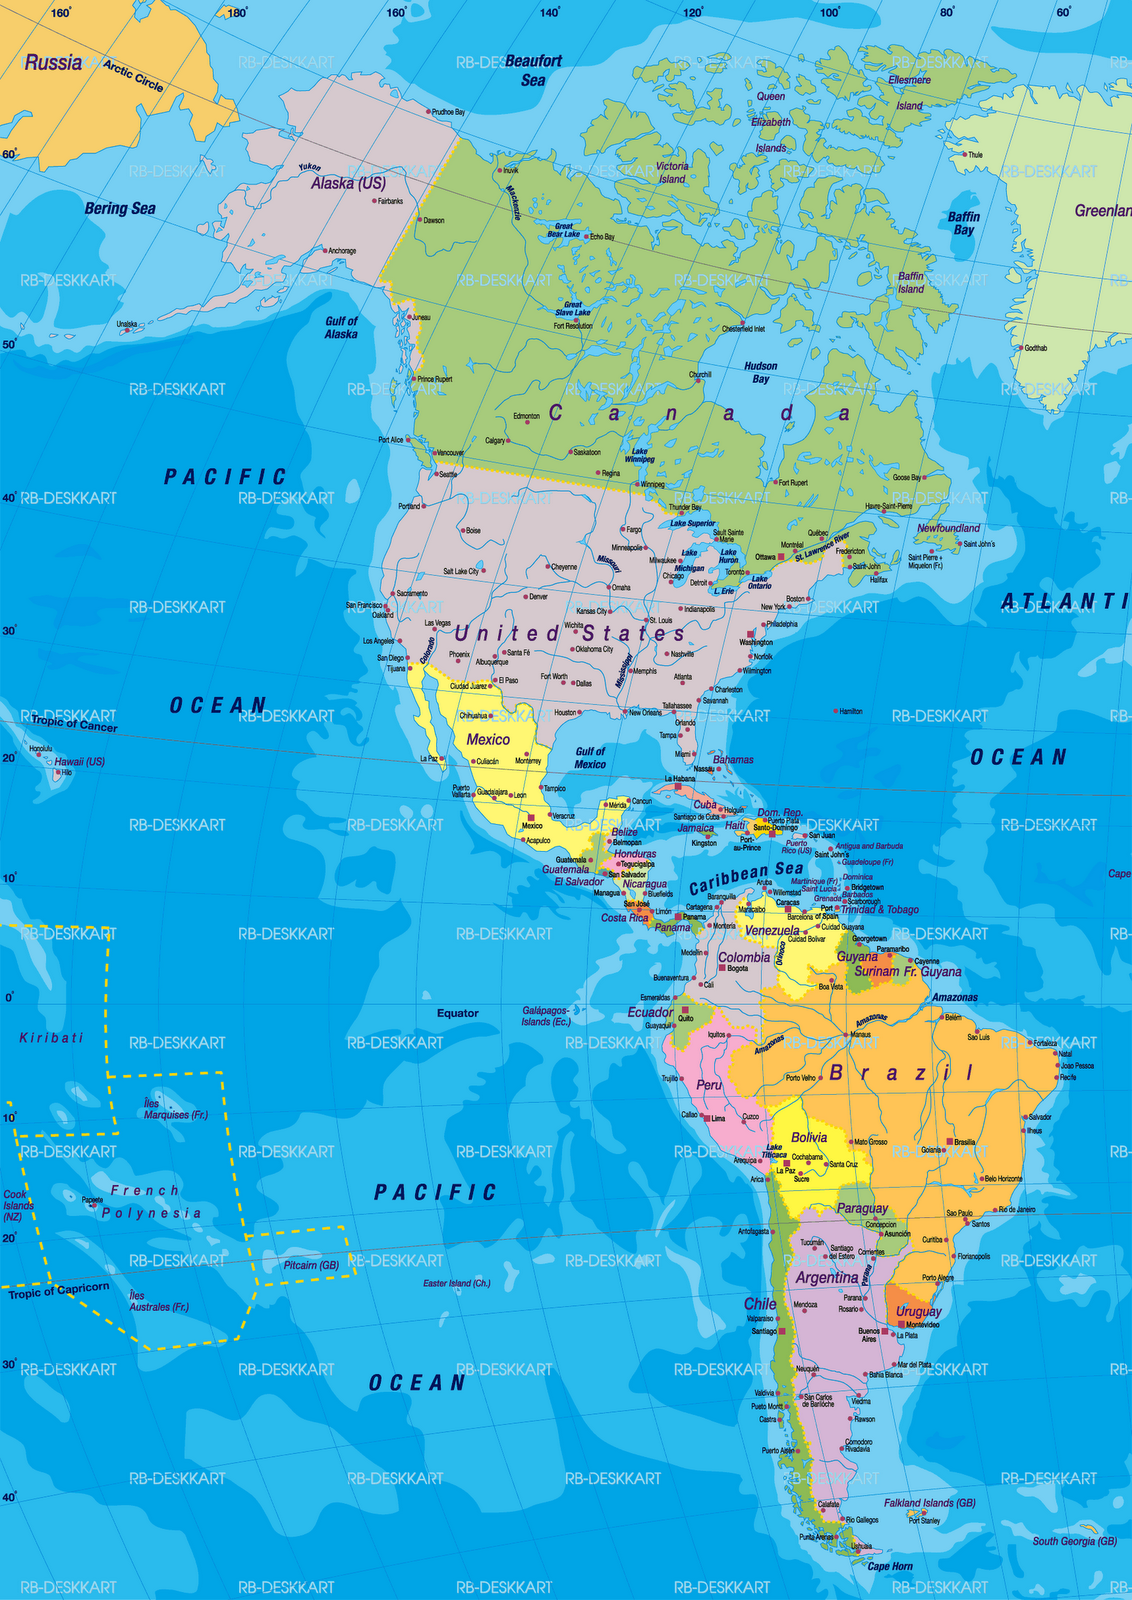 Pastor Murback || Pagina Oficial: Mapa da América Central